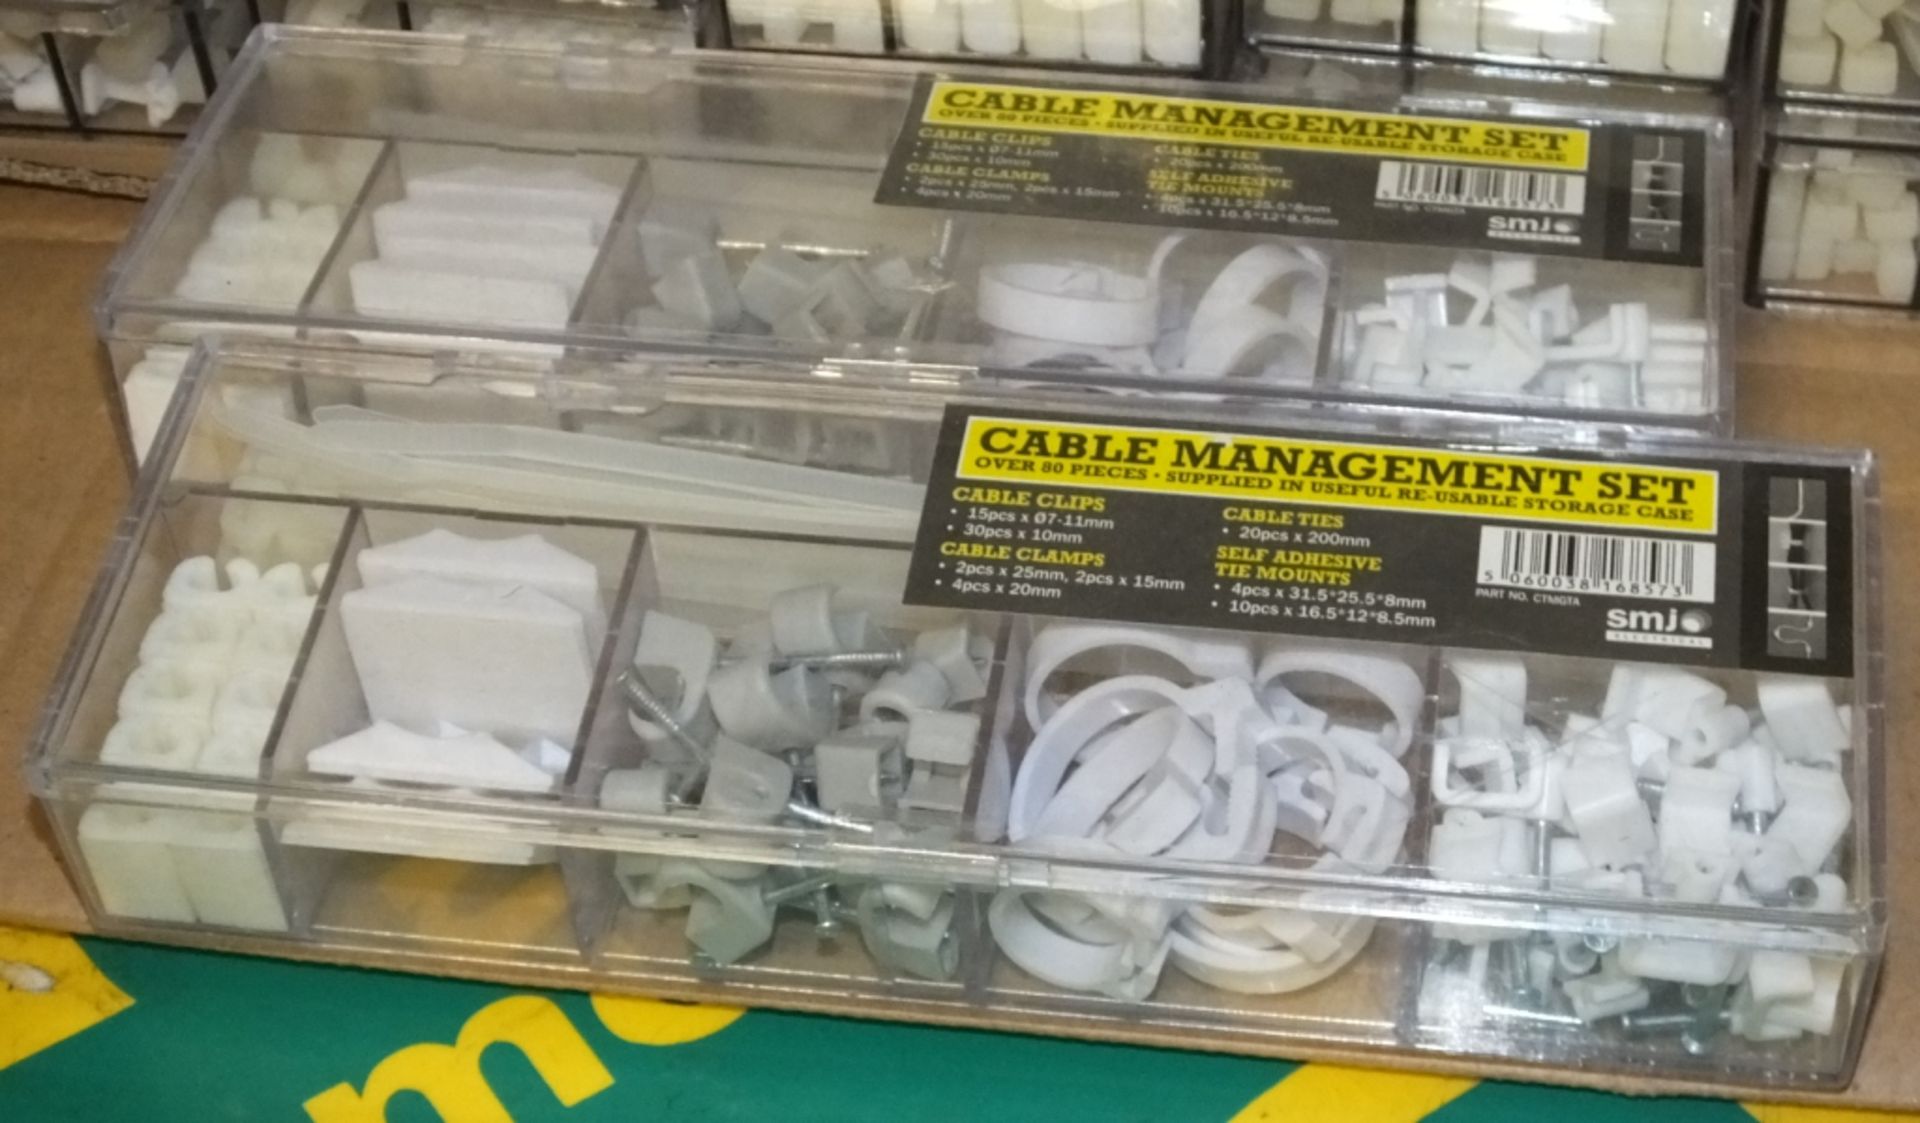 34x SMJ cable managment small parts kits - Image 2 of 2